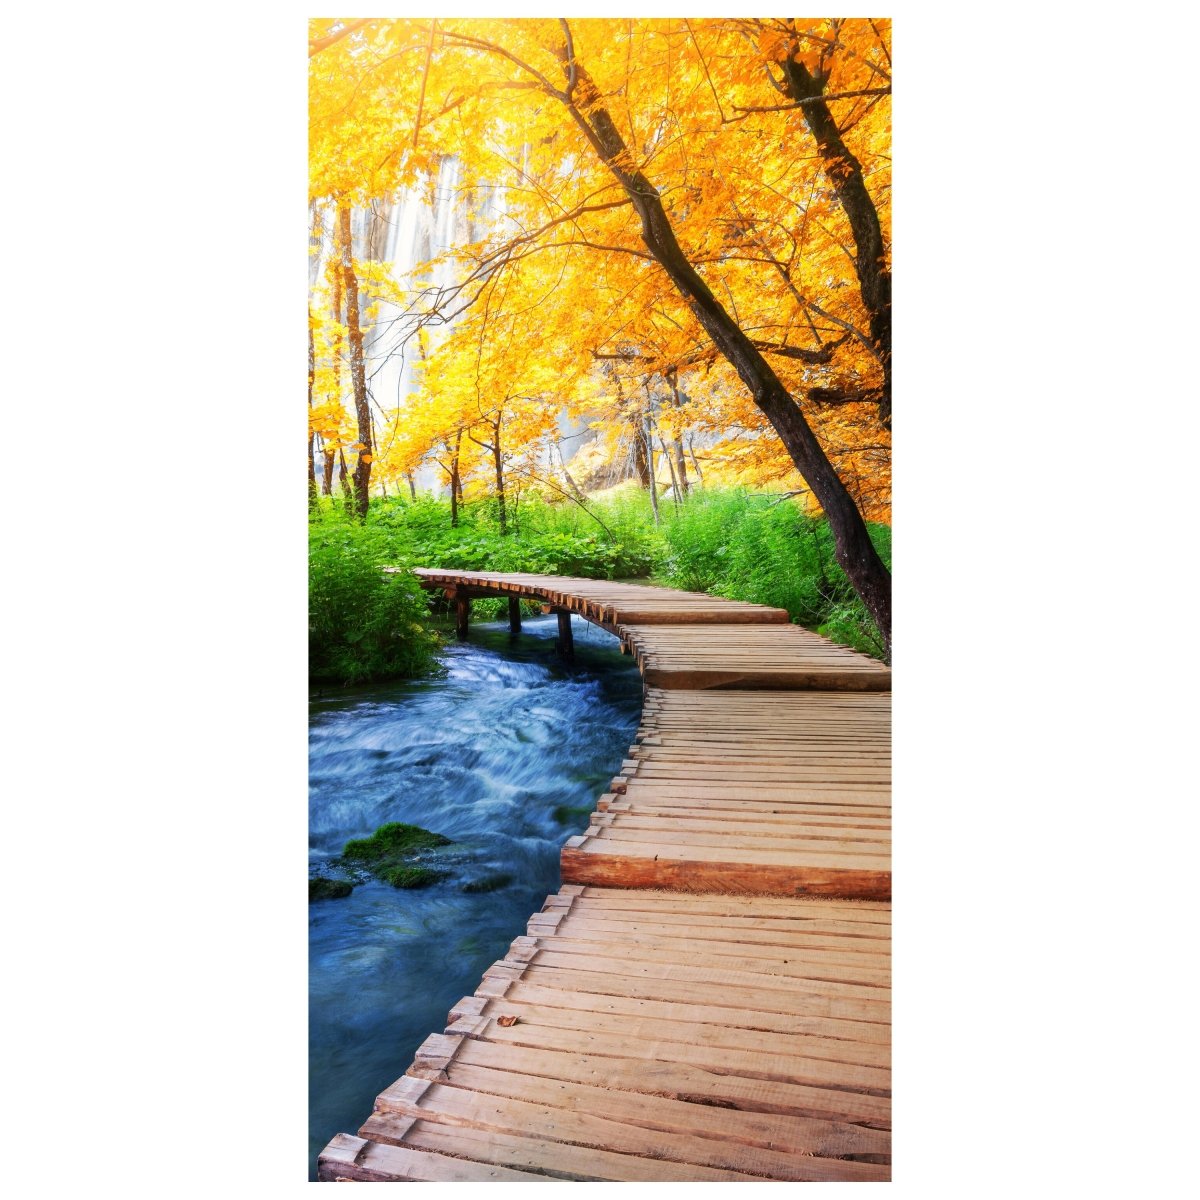 Türtapete Holz Steg über Bach, Wald, Herbst, Bäume M1287 - Bild 2